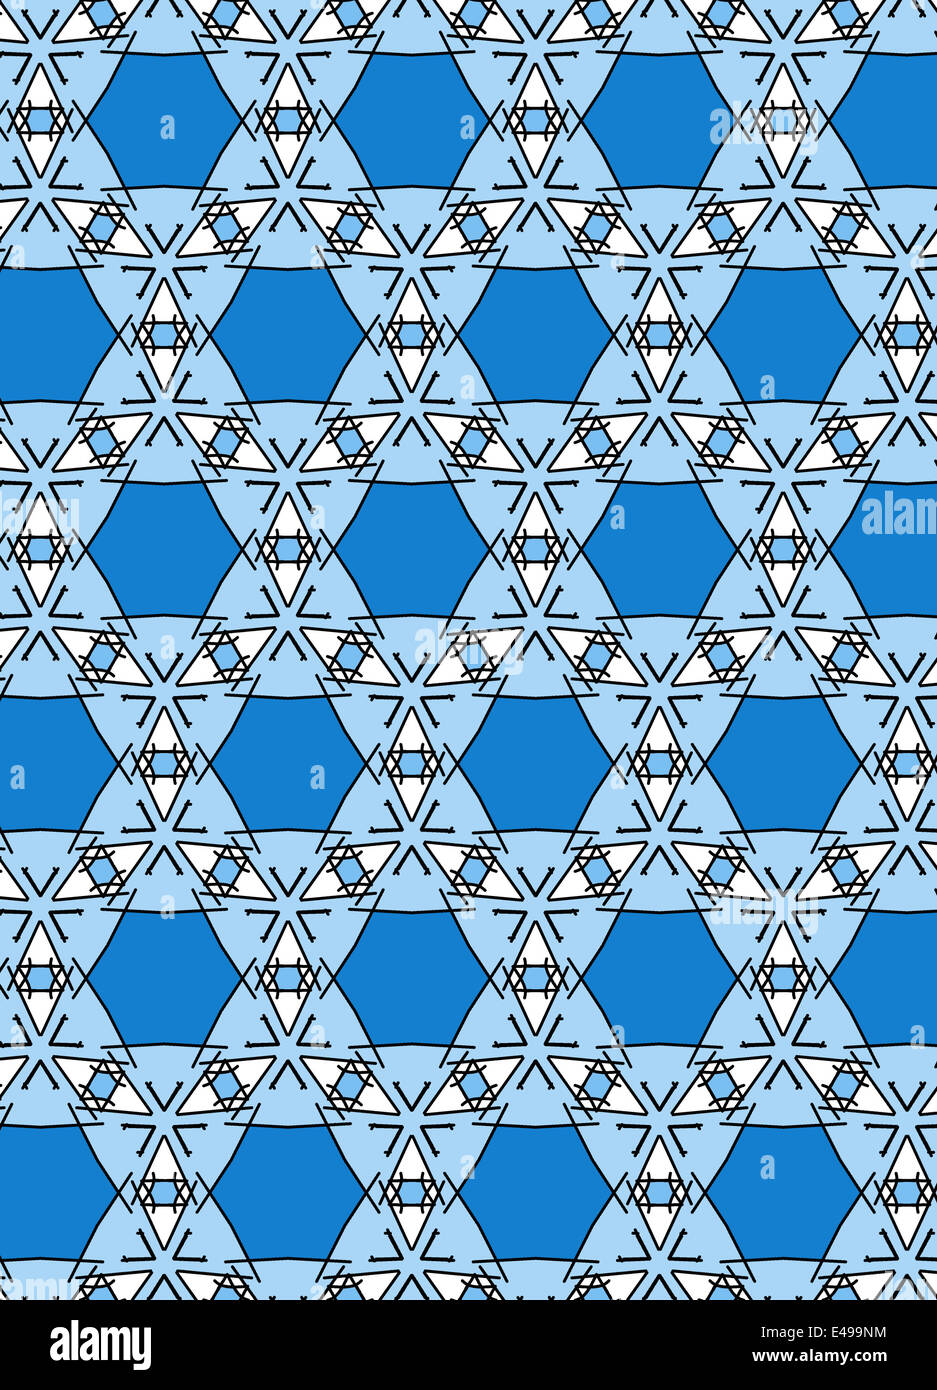 Illustration of symmetrical designed wallpaper Stock Photo